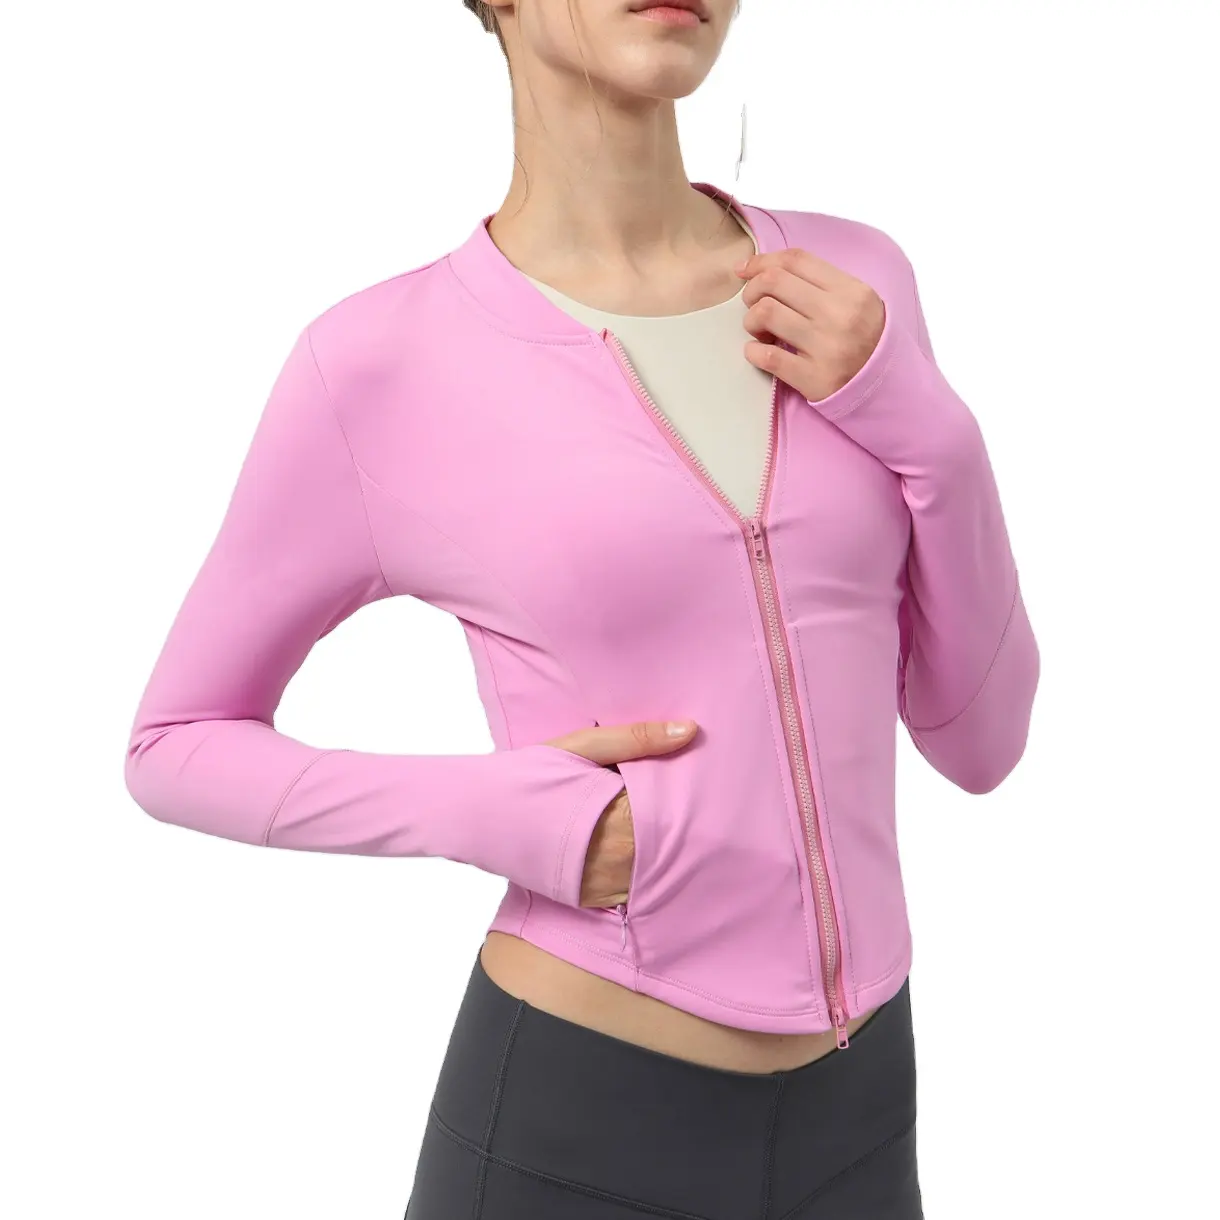 Fashion Two Way Zipper Fleece Training Running Jacket Women Workout Long Sleeve Slim Fit Sports Jacket